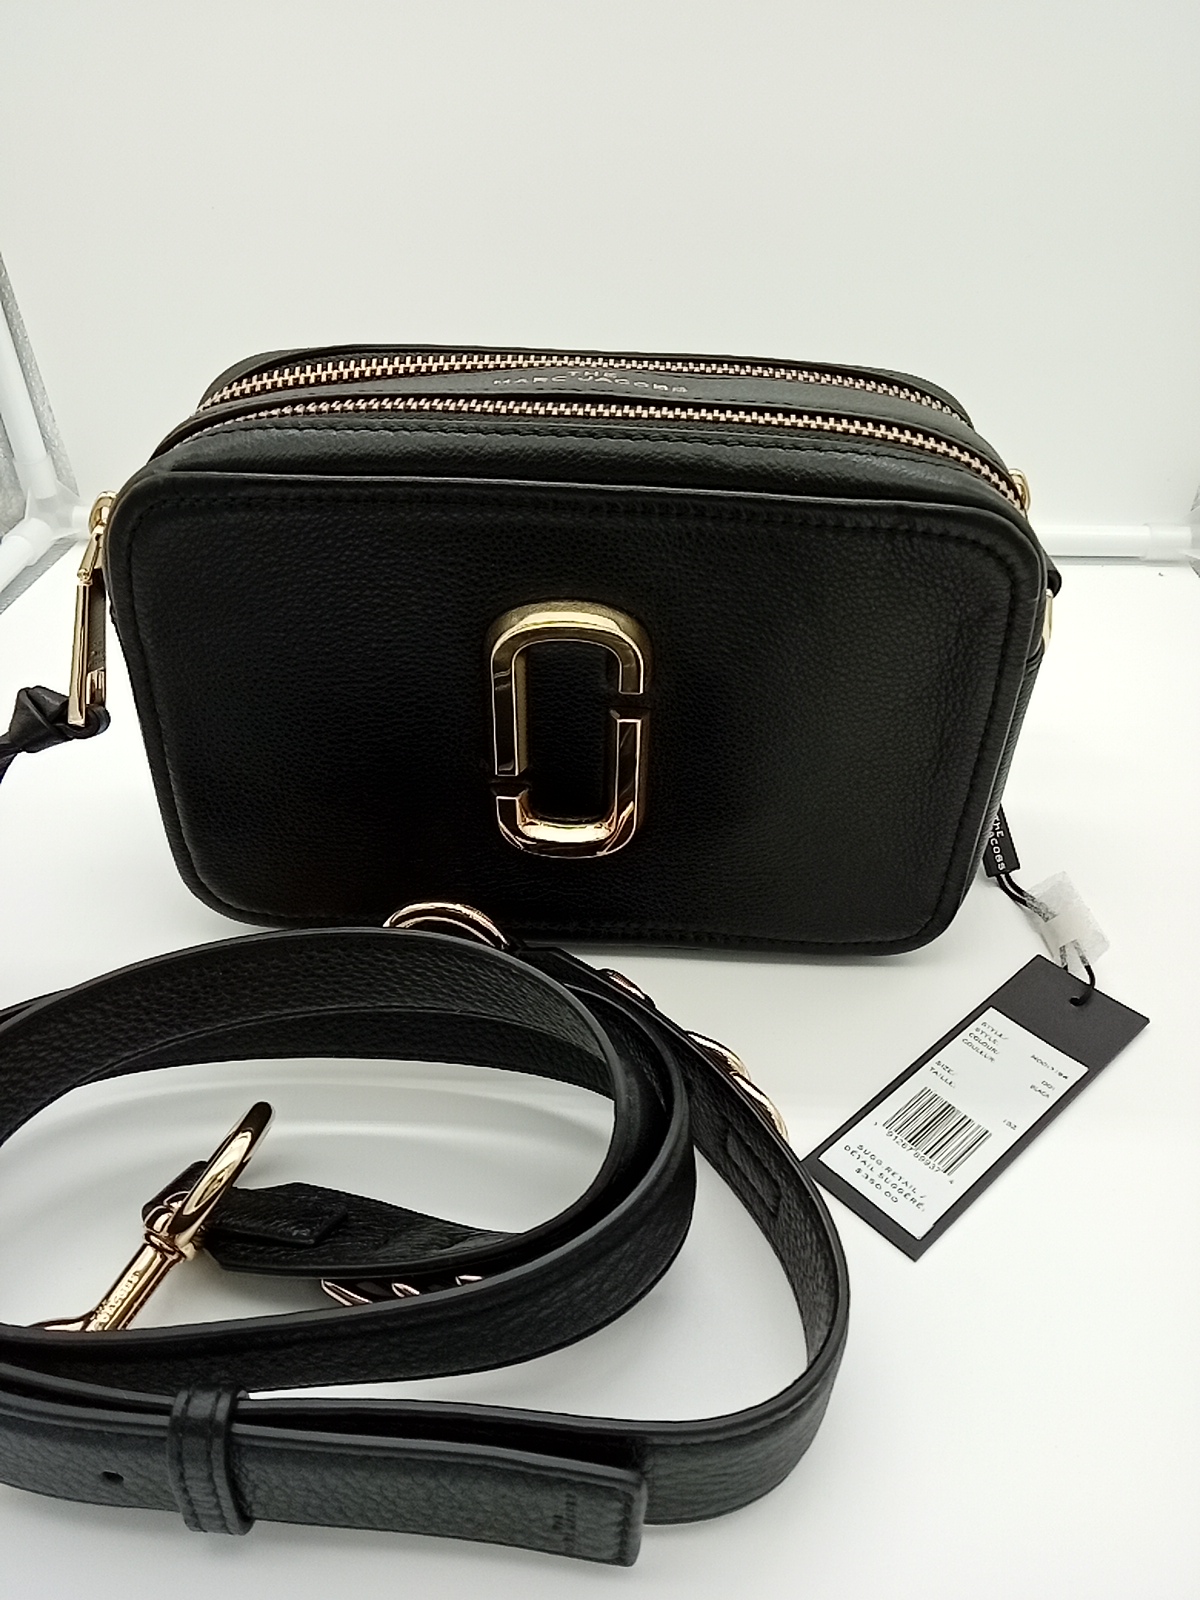 MARC JACOBS The Snapshot Handbags, SHELF PULLS, 5521778, 5 units, PA ...